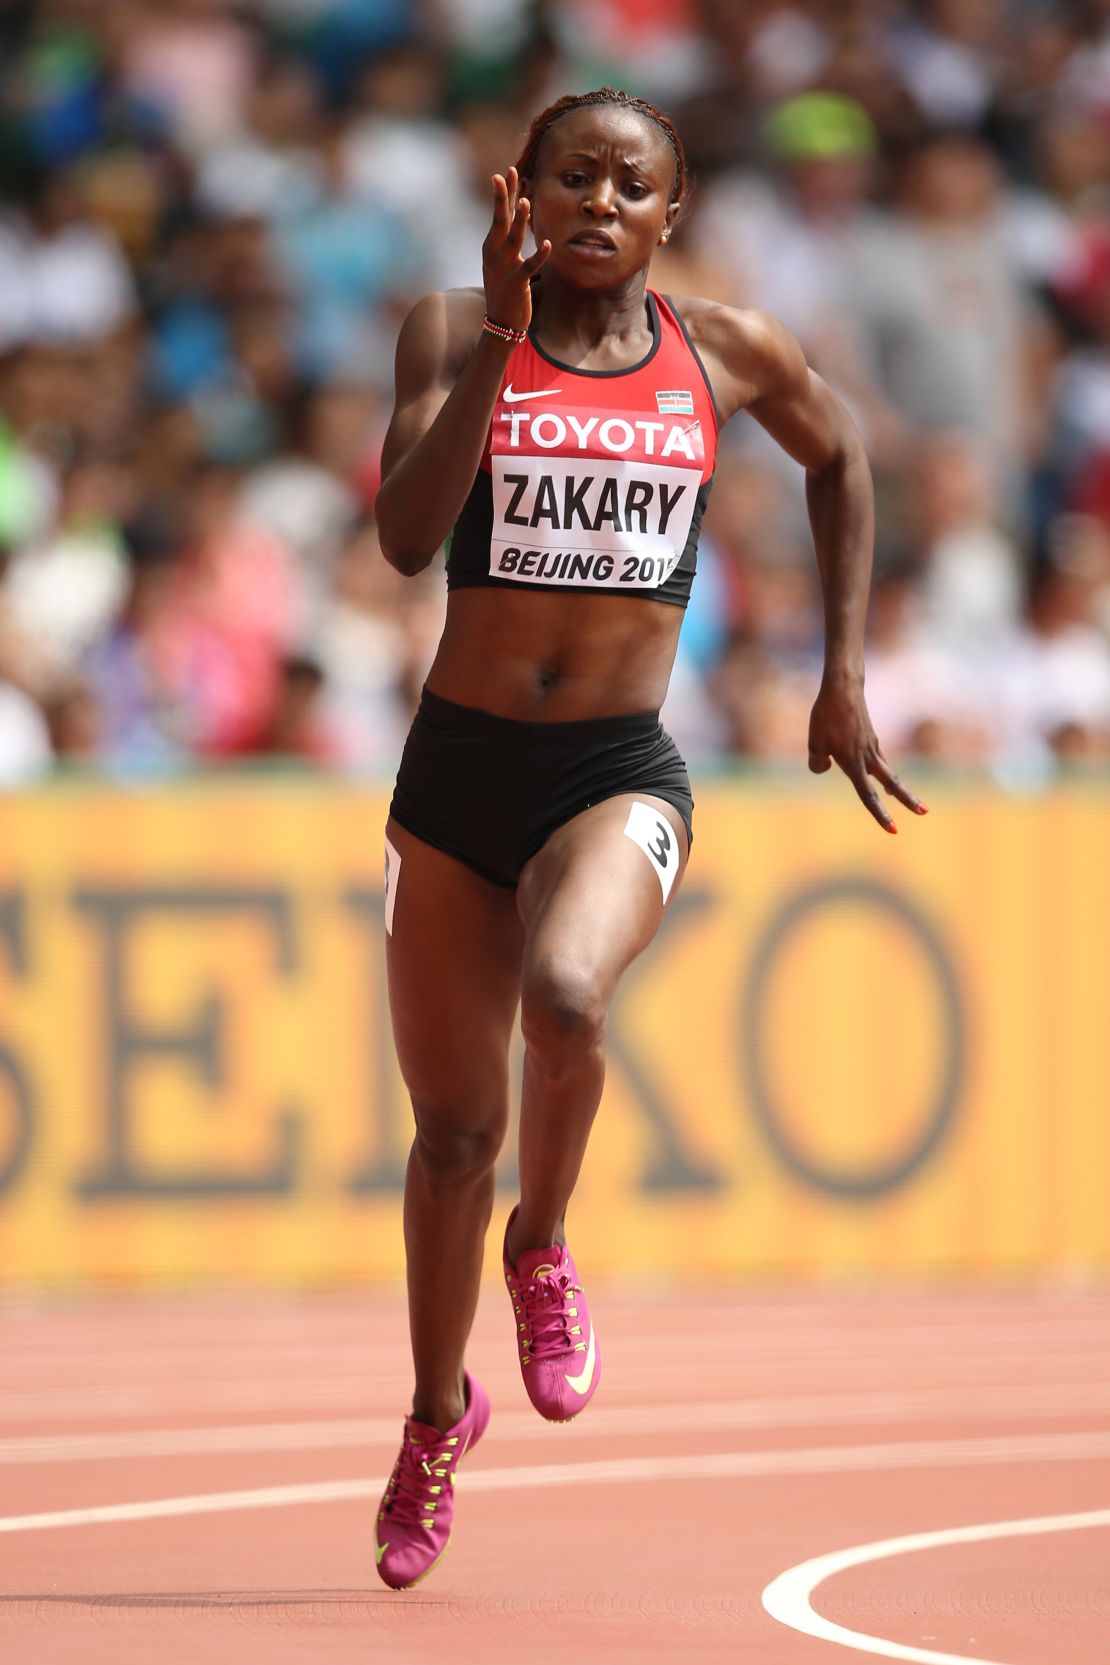 Joyce Zakary of Kenya